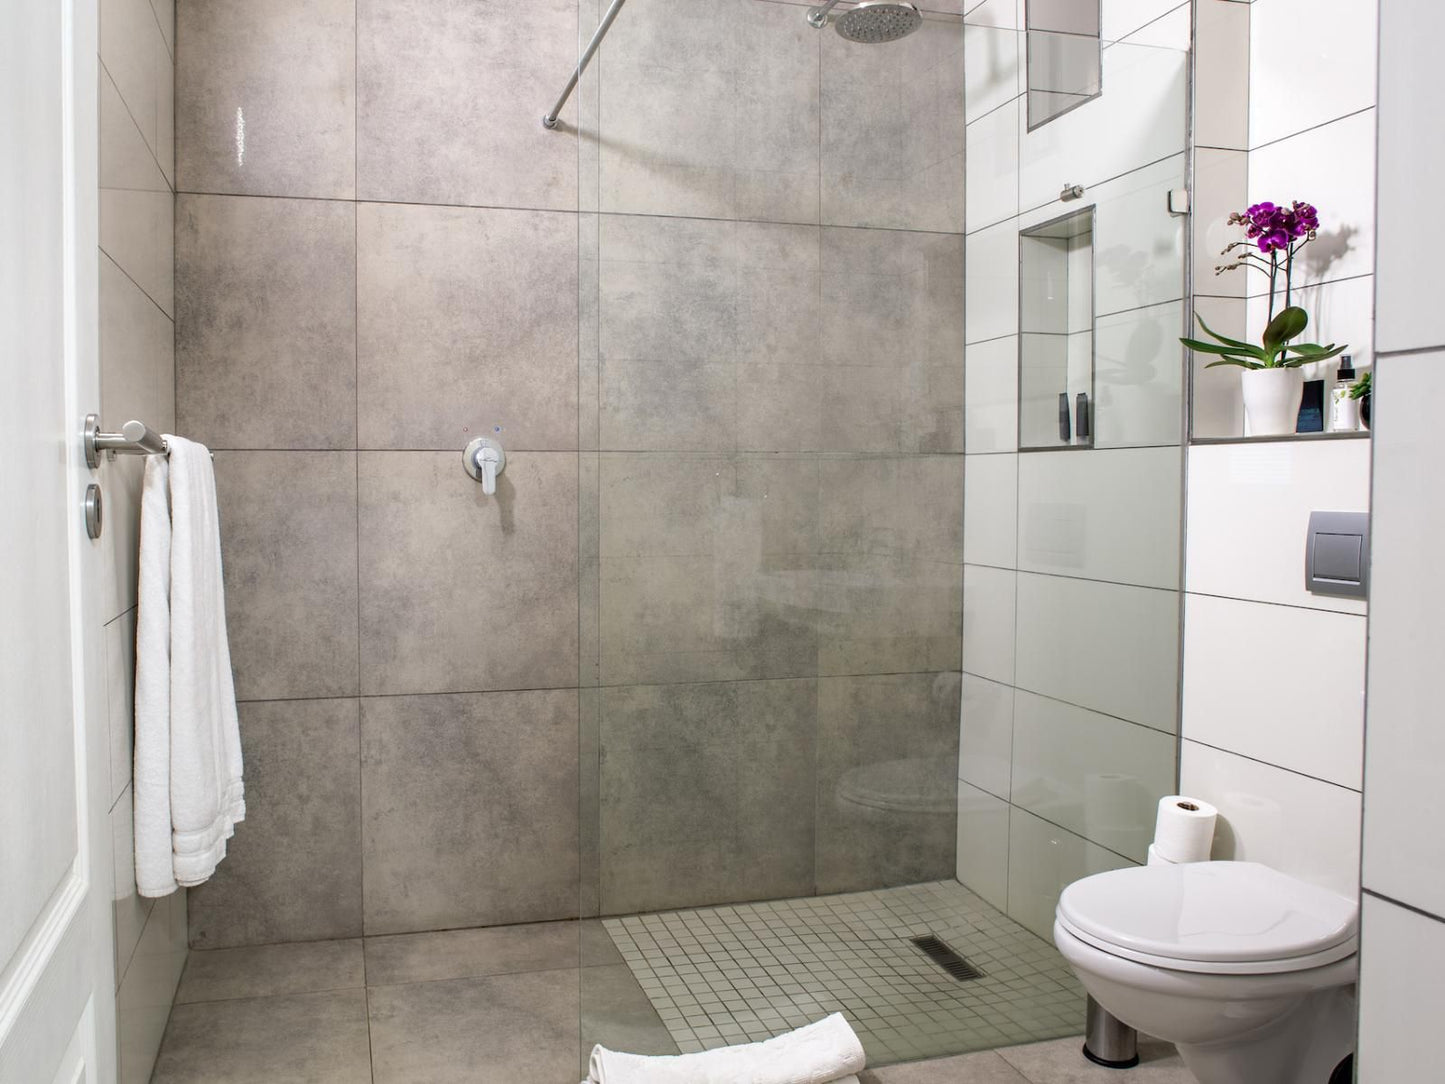 Villa San Giovanni Wonderboom Pretoria Tshwane Gauteng South Africa Unsaturated, Bathroom